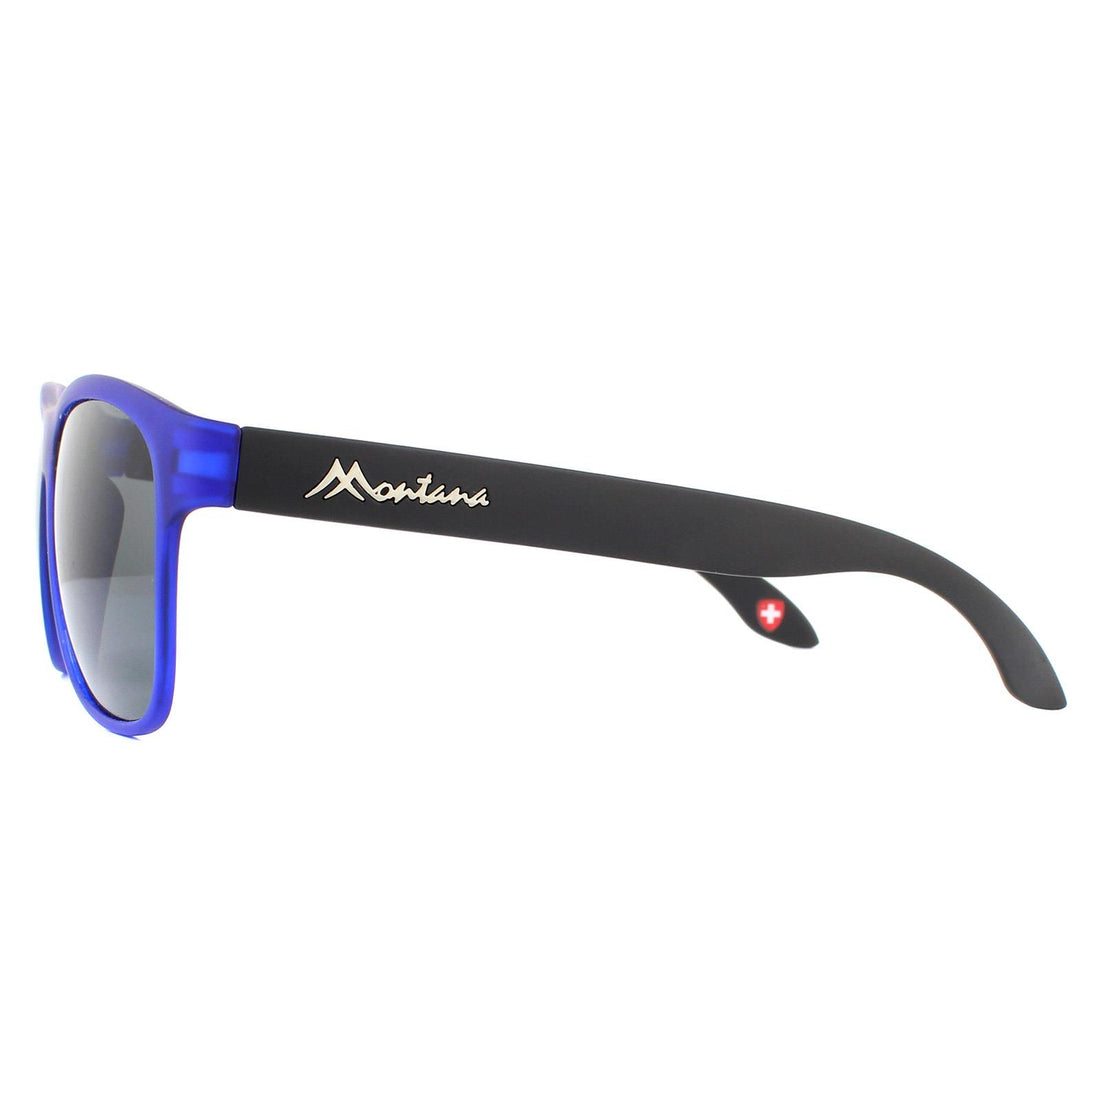 Montana Sunglasses MP38 D Blue with Black Rubbertouch Black Polarized